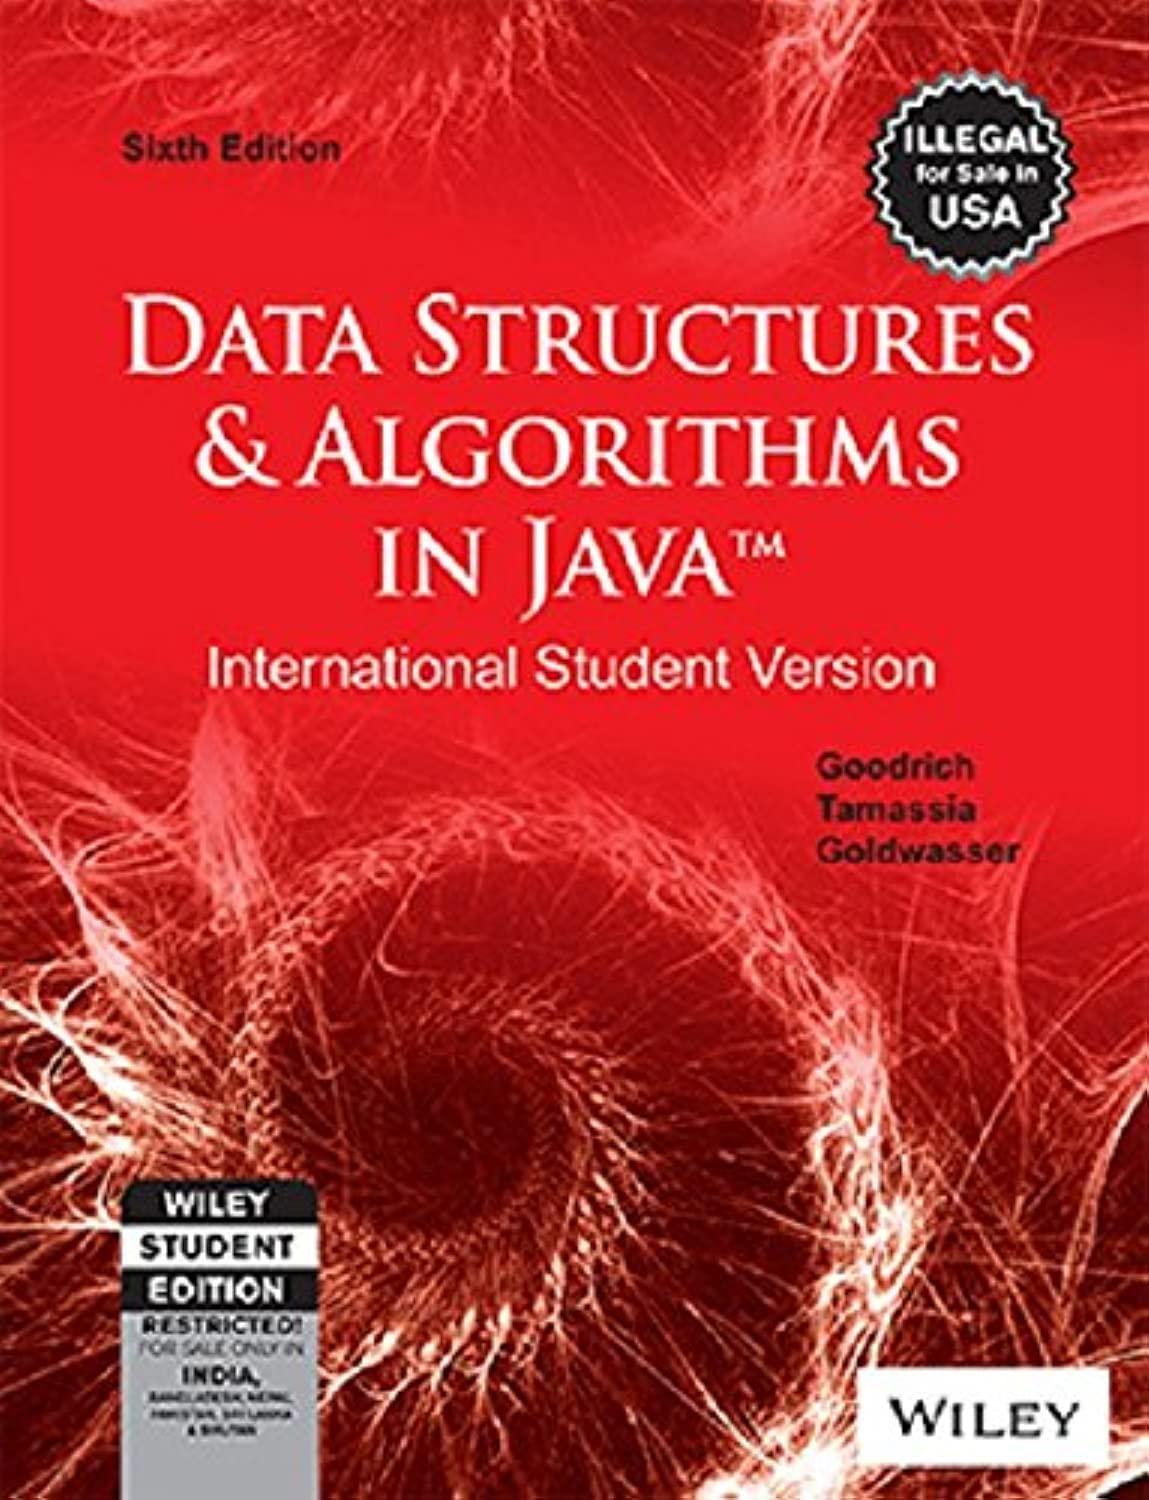 data structures and algorithms in java 6th edition tamassiar goldwasser, goodrichr 8126551909, 978-8126551903